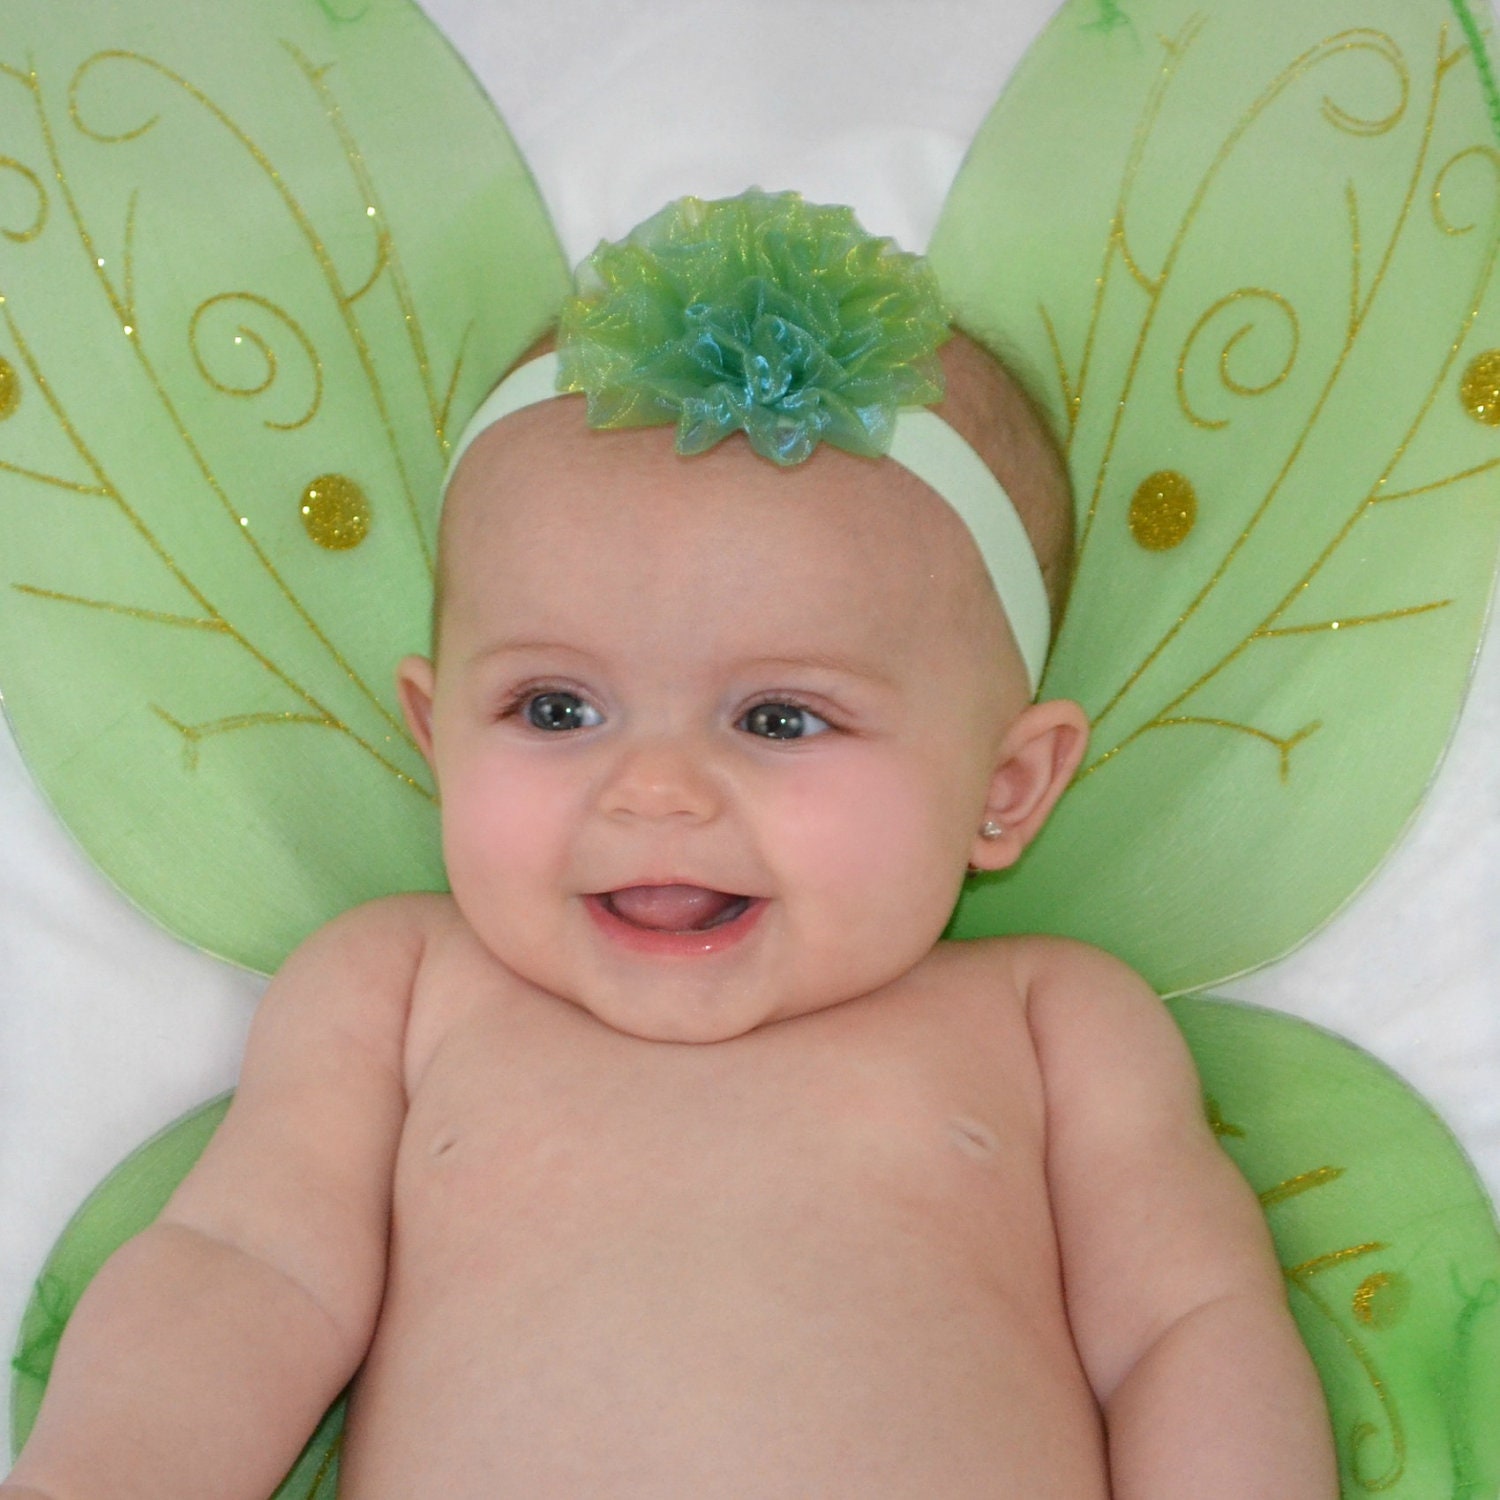 520 New baby headband with hair attached 496 Baby Headband Green Hair Bow Organza Flower on Light Green Headband   